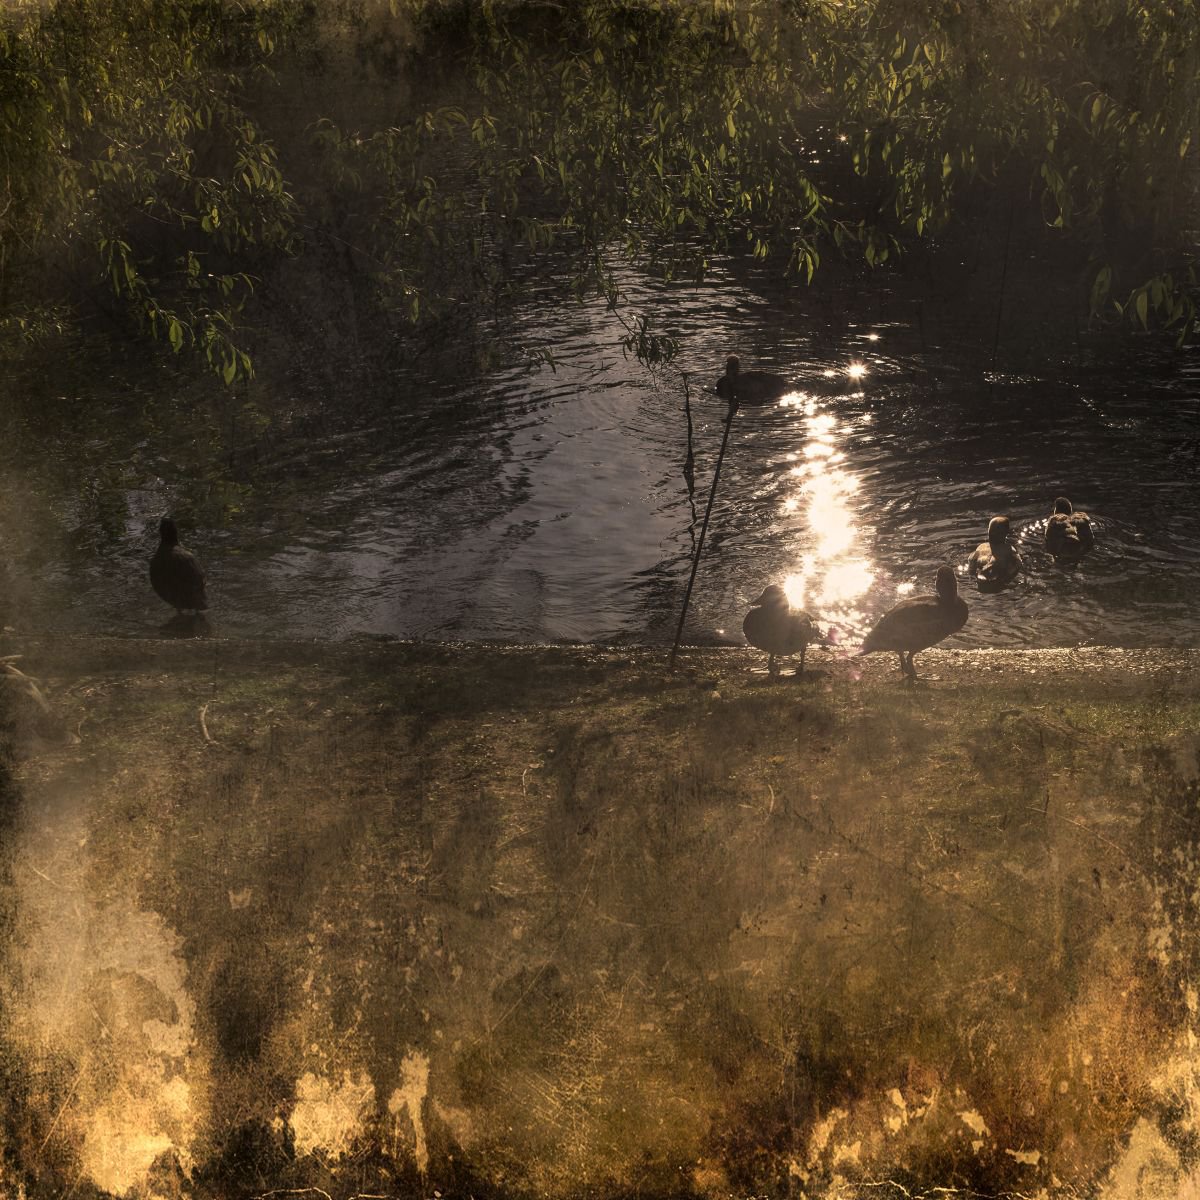 Ducks in the Water by Chiara Vignudelli